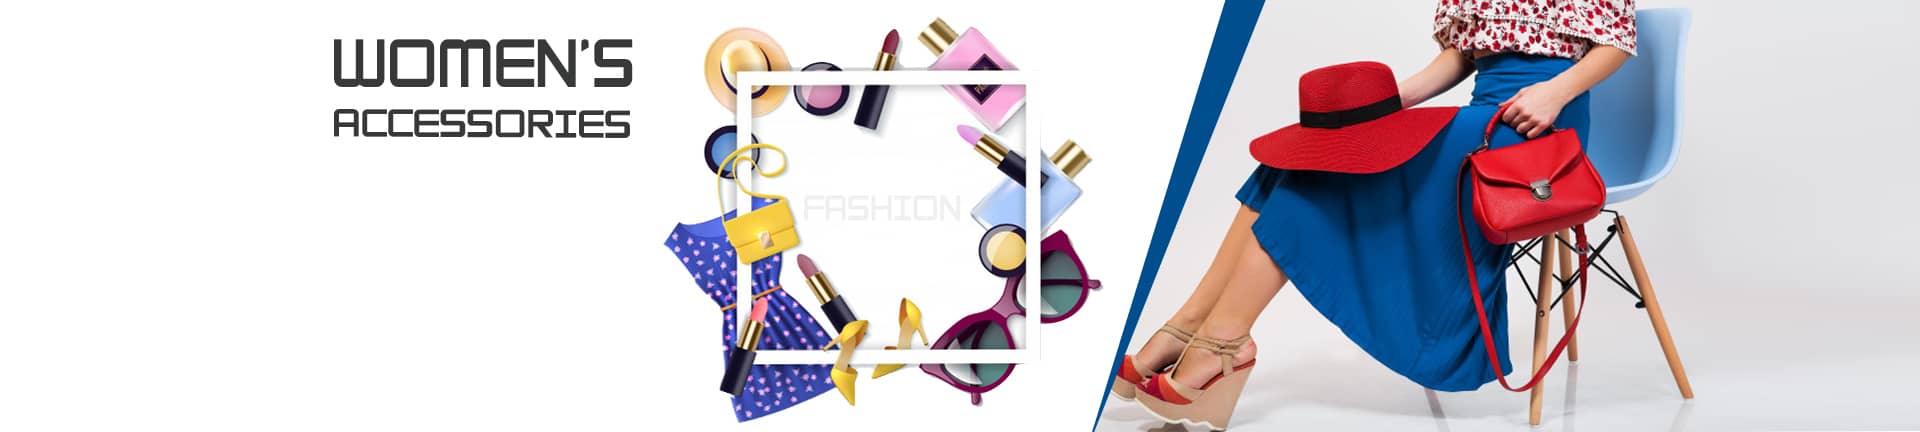 Buy Women's Fashion Accessories Online in Pakistan - Kayazar